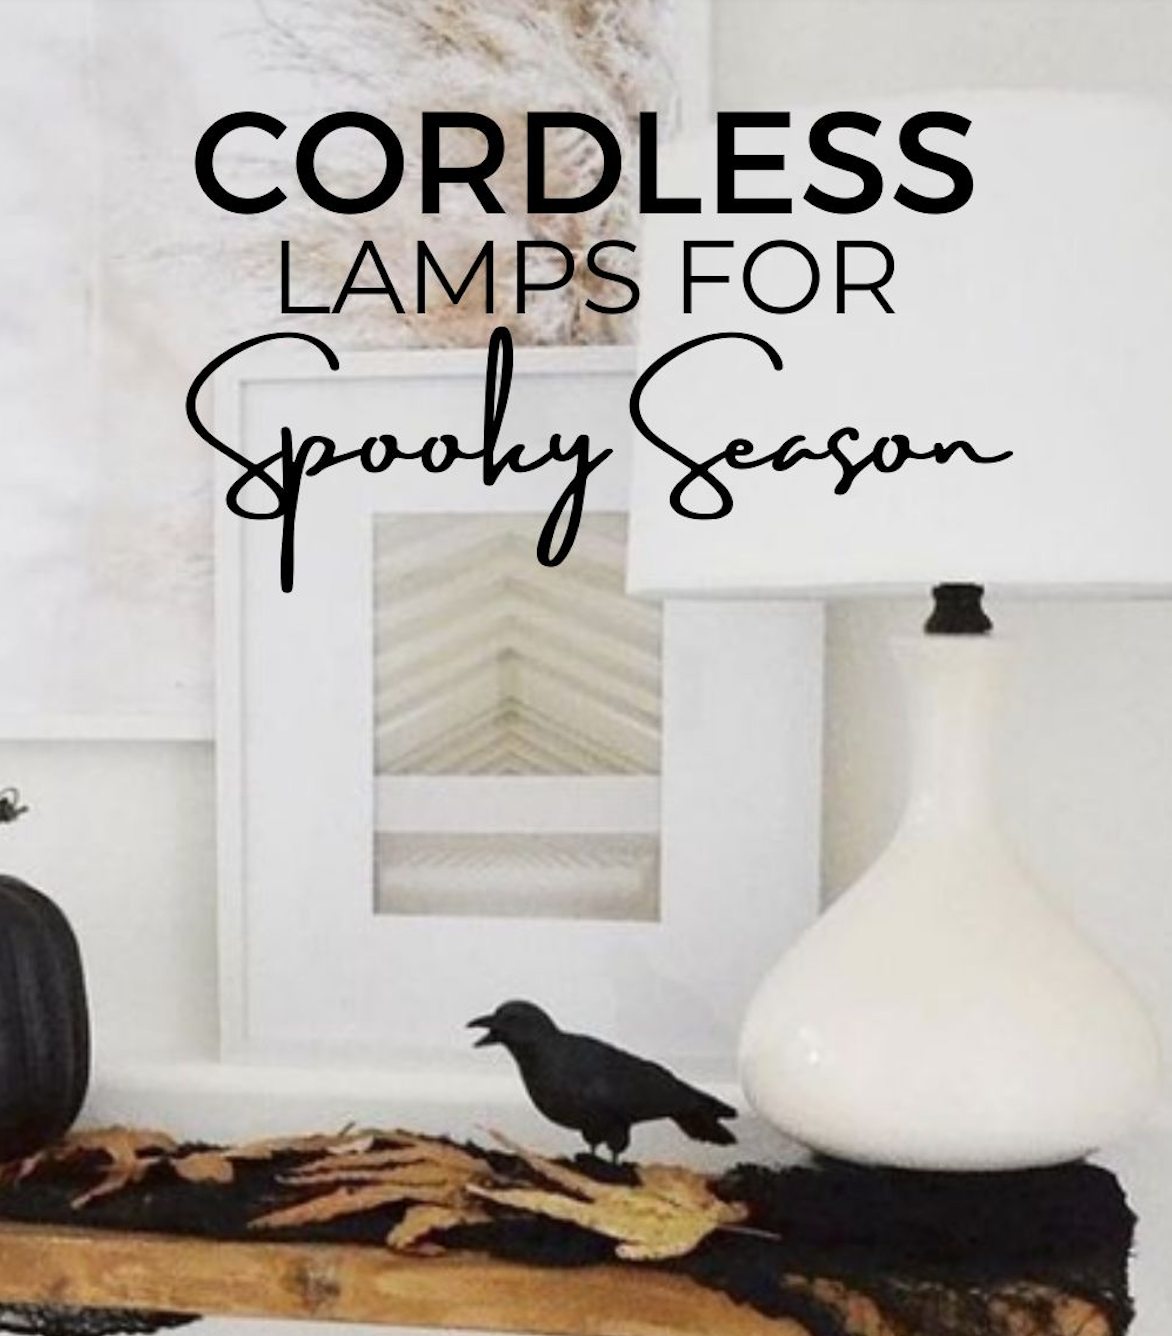 Cordless Lamps For Spooky Season!